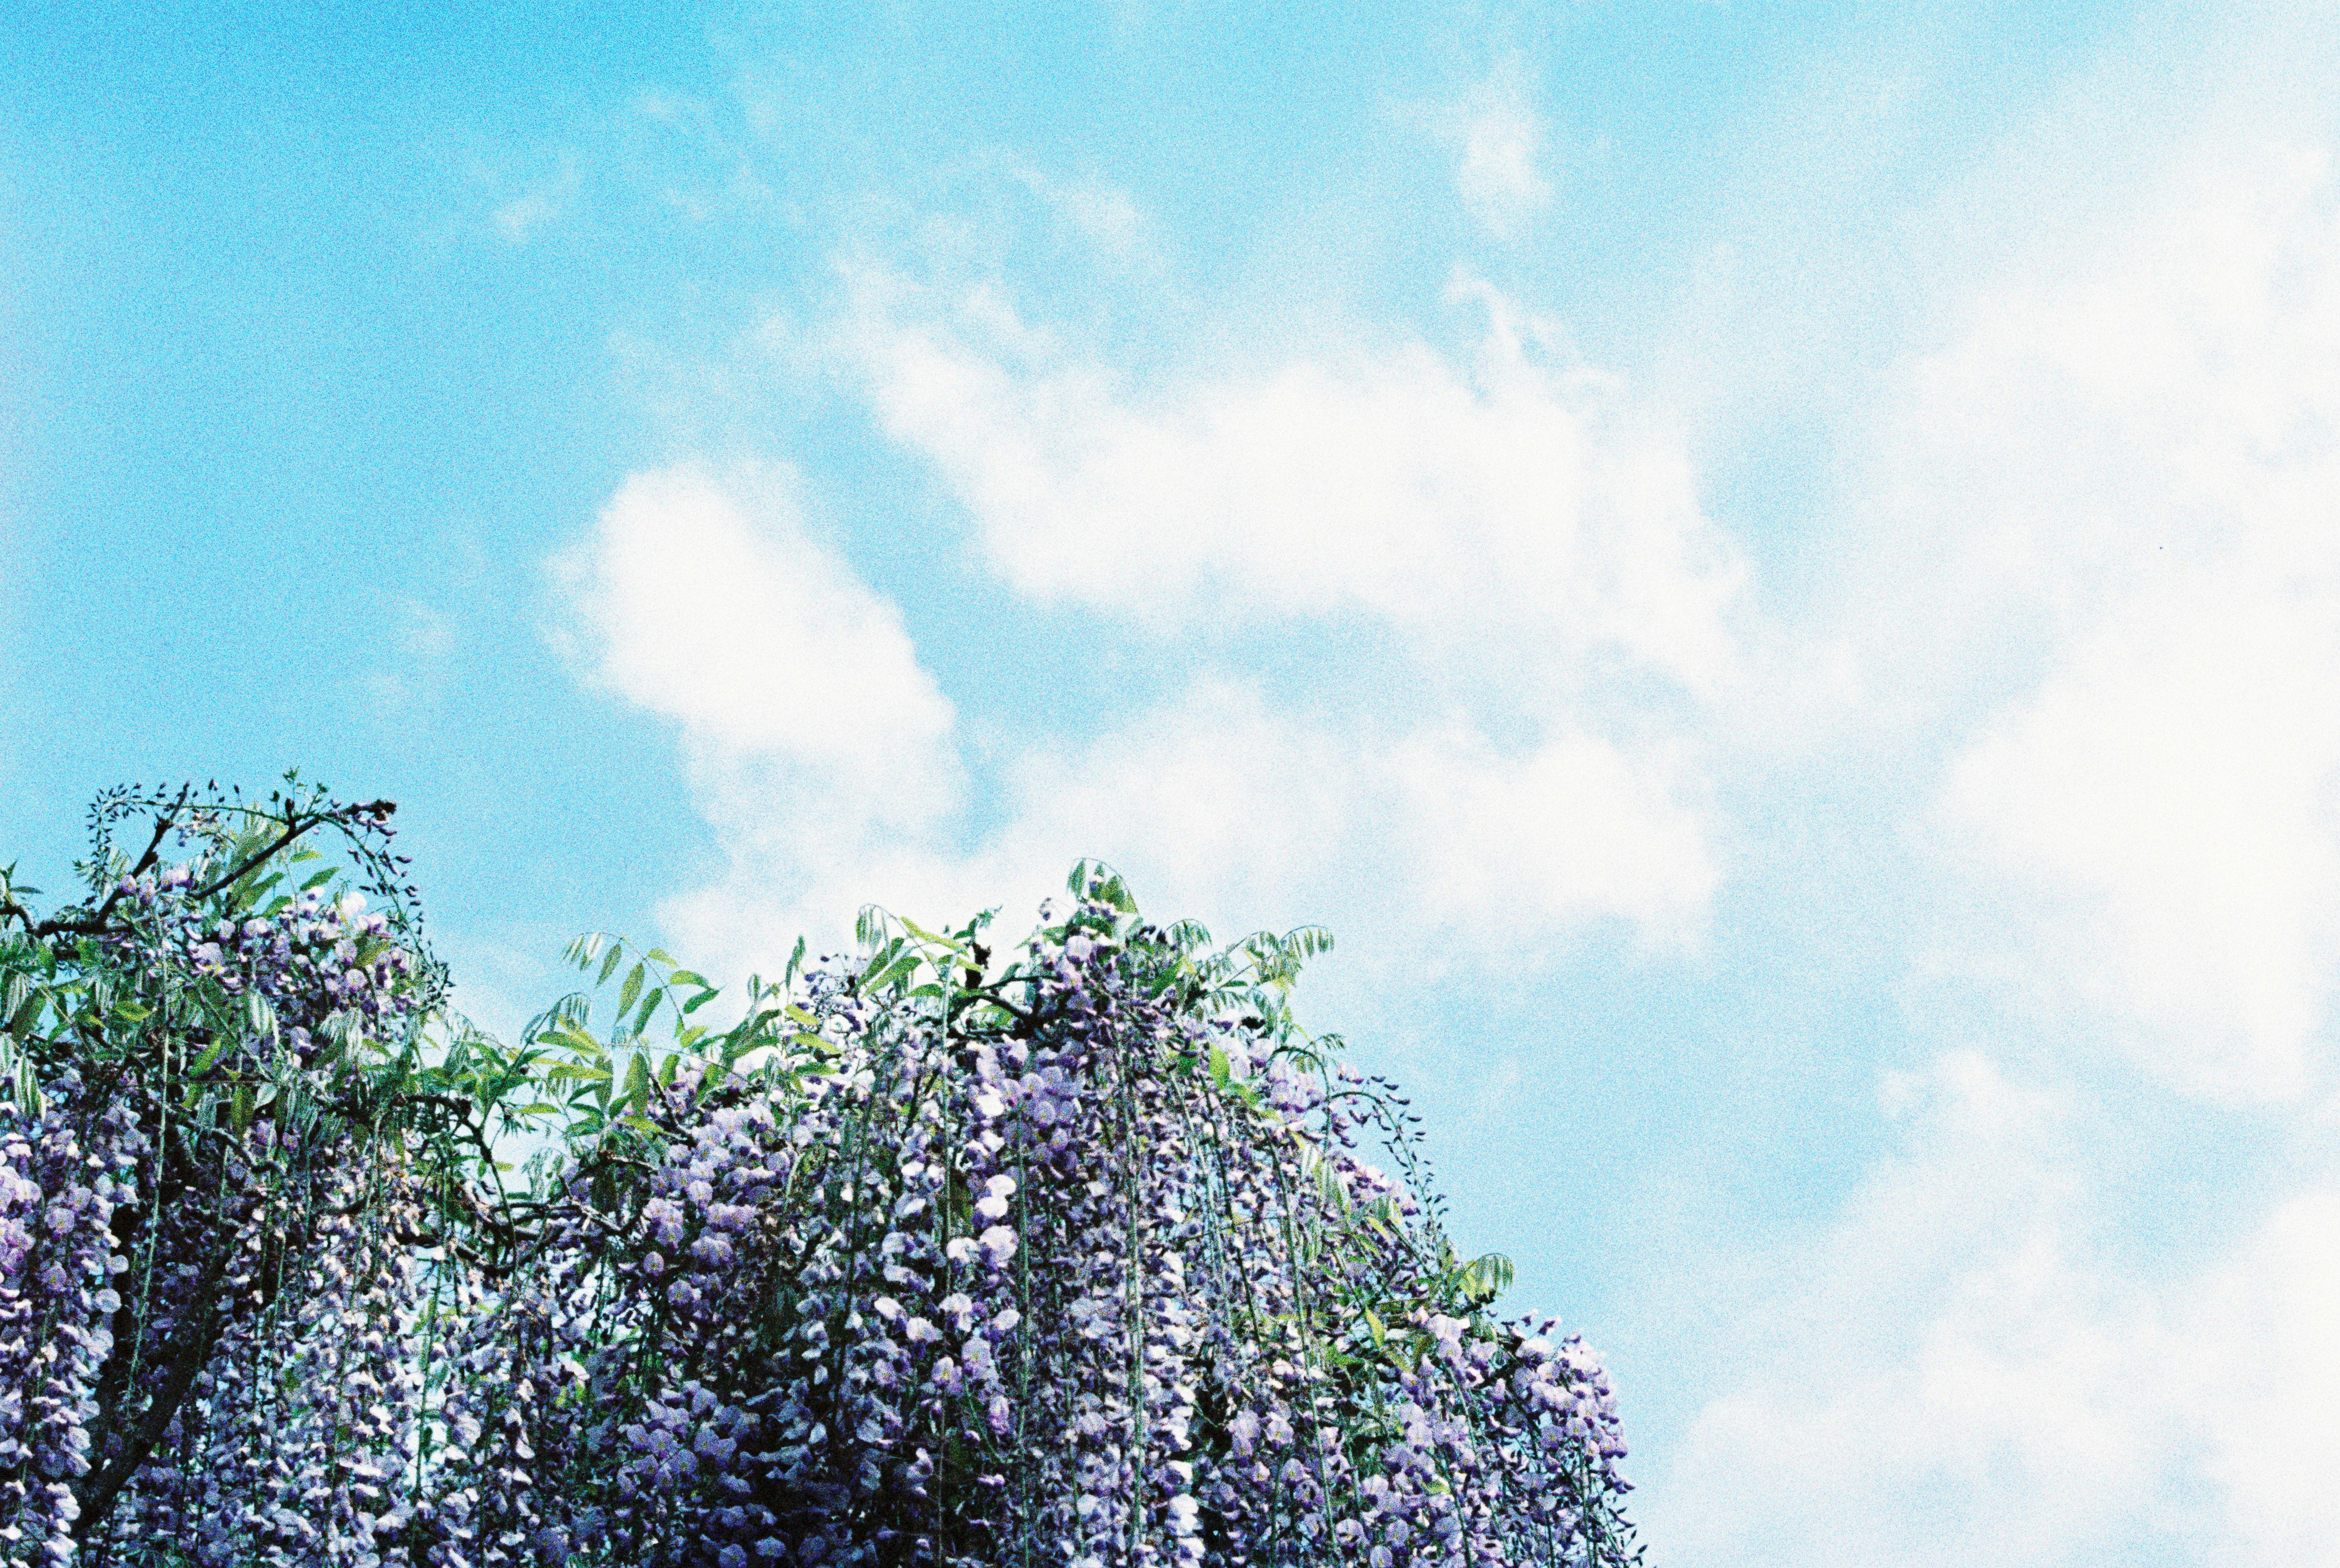 purple flowers under blue sky during daytime